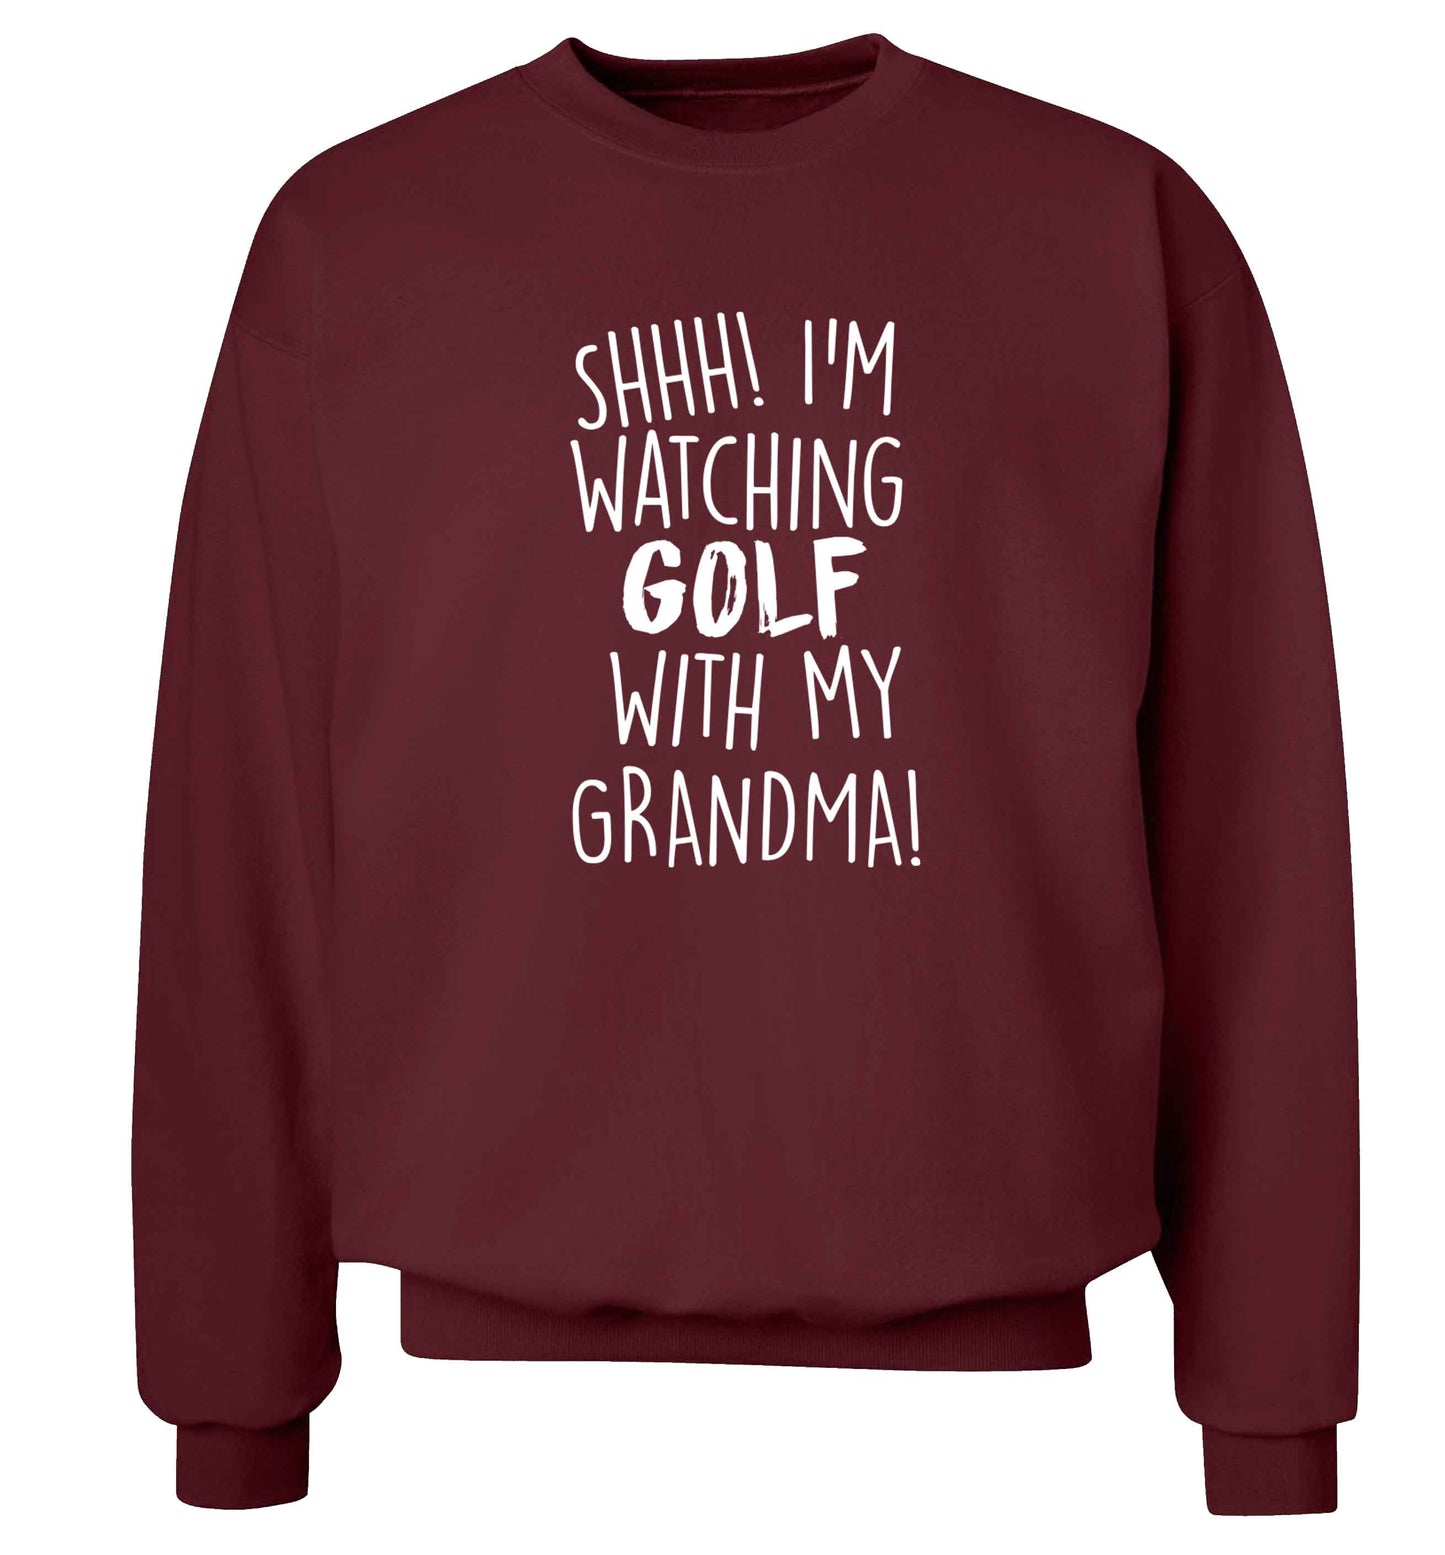 Shh I'm watching golf with my grandma Adult's unisex maroon Sweater 2XL